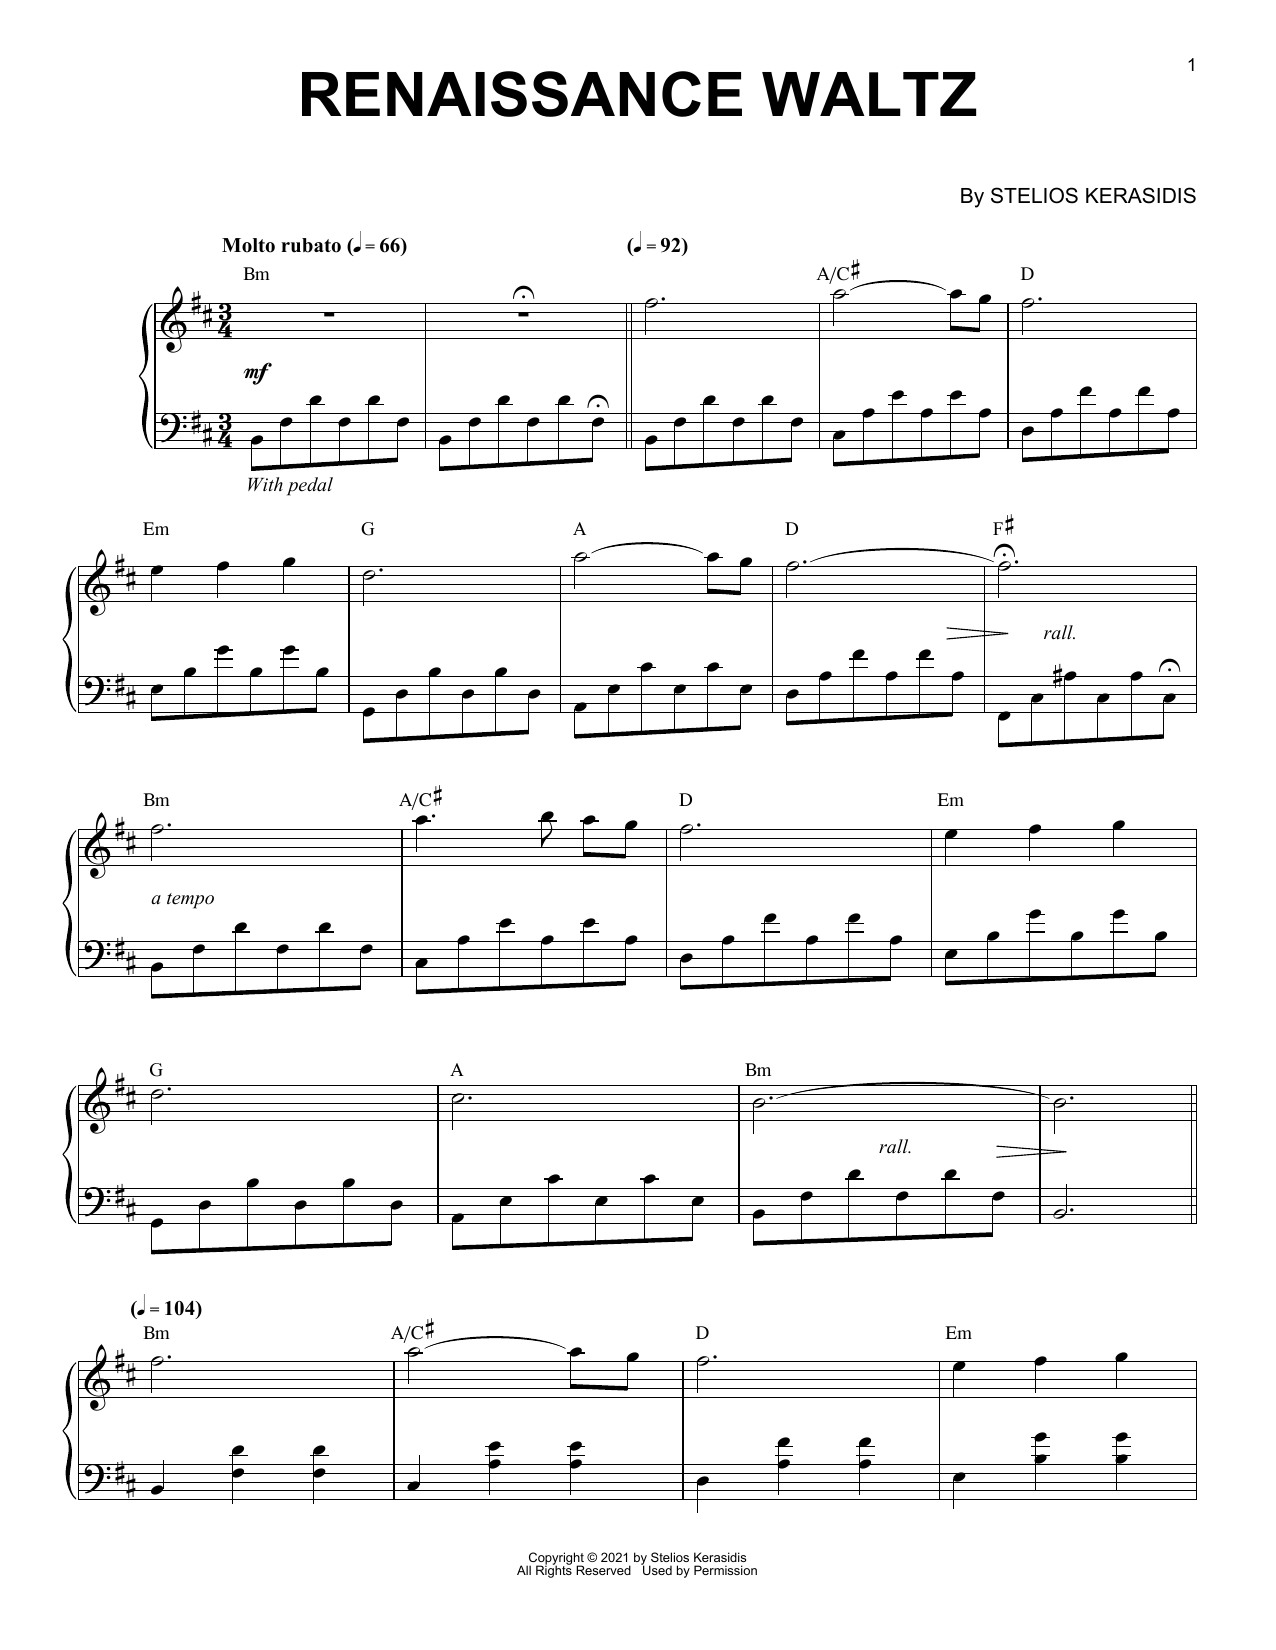 Stelios Kerasidis Renaissance Waltz Sheet Music Notes & Chords for Piano Solo - Download or Print PDF